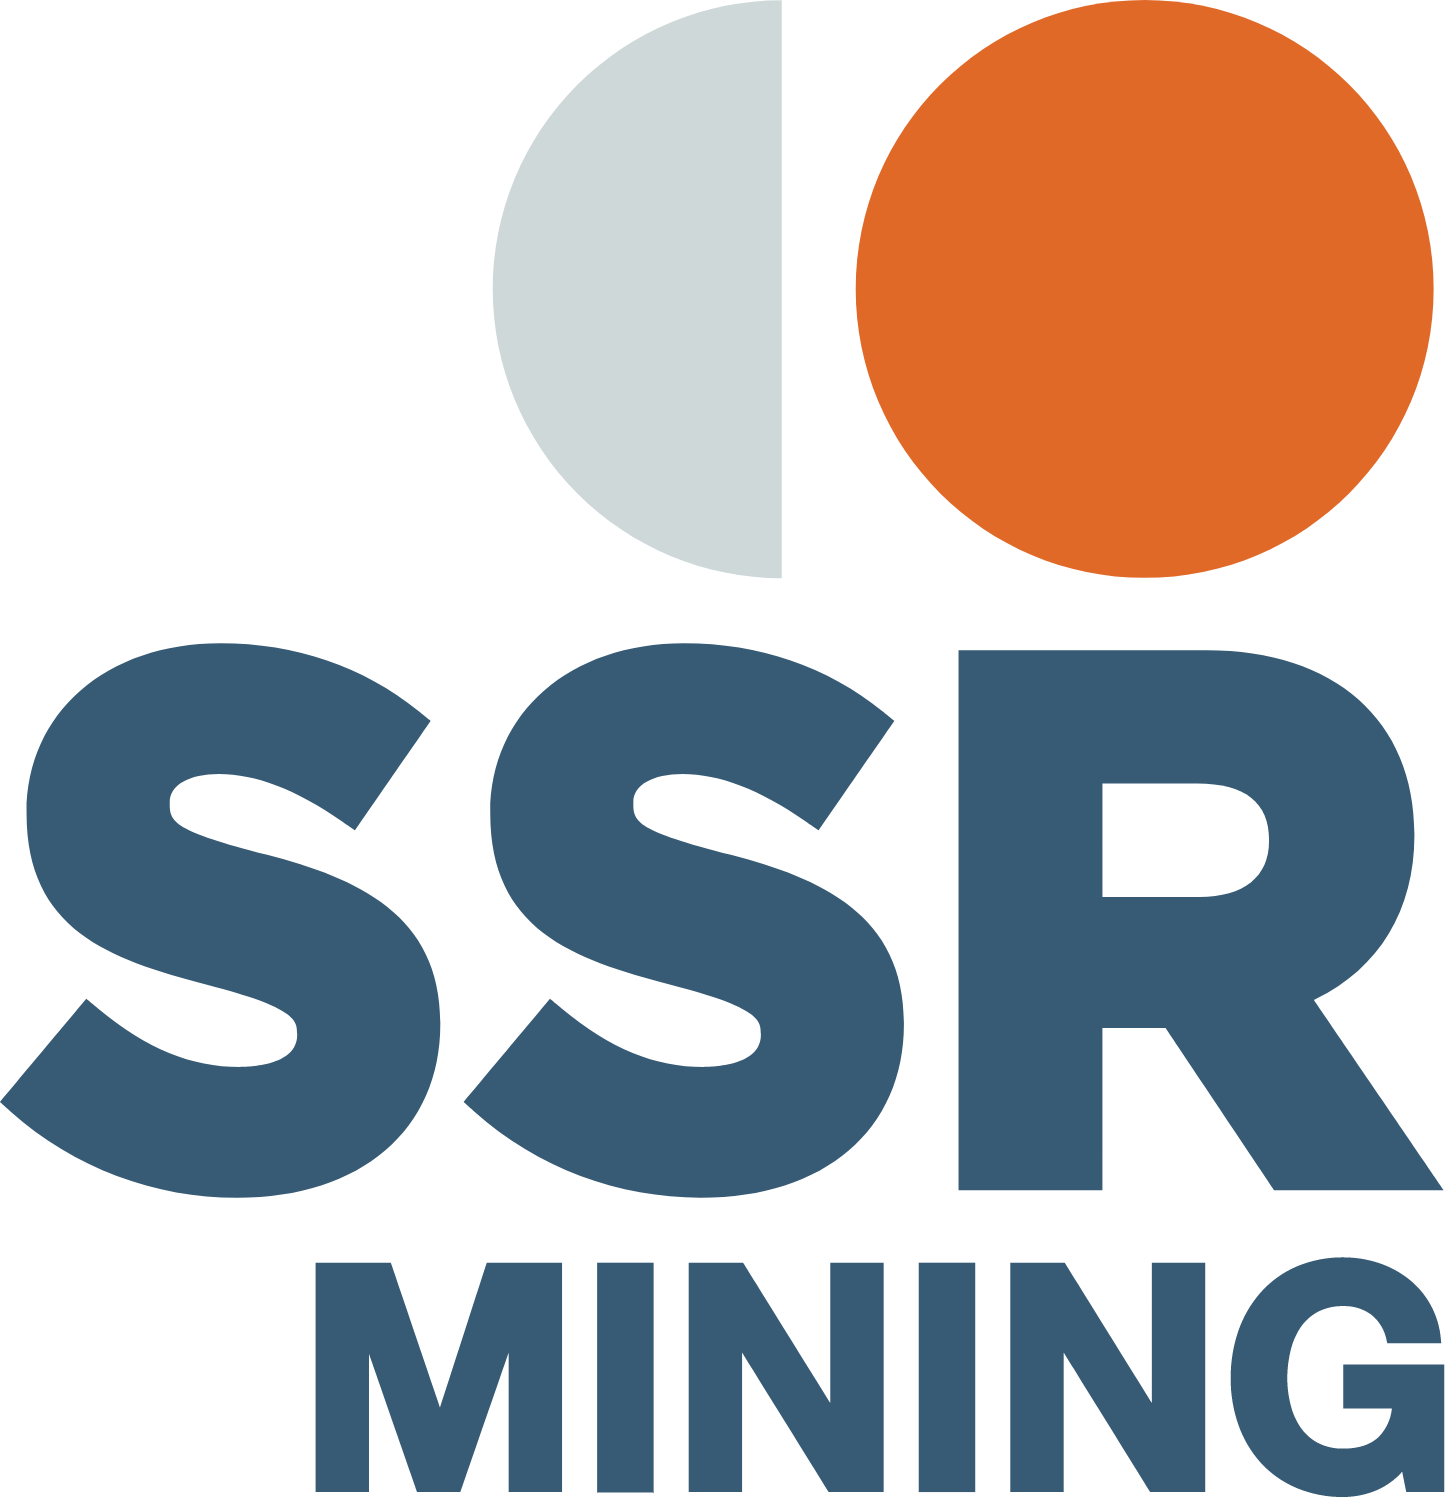 SSR Mining logo large (transparent PNG)